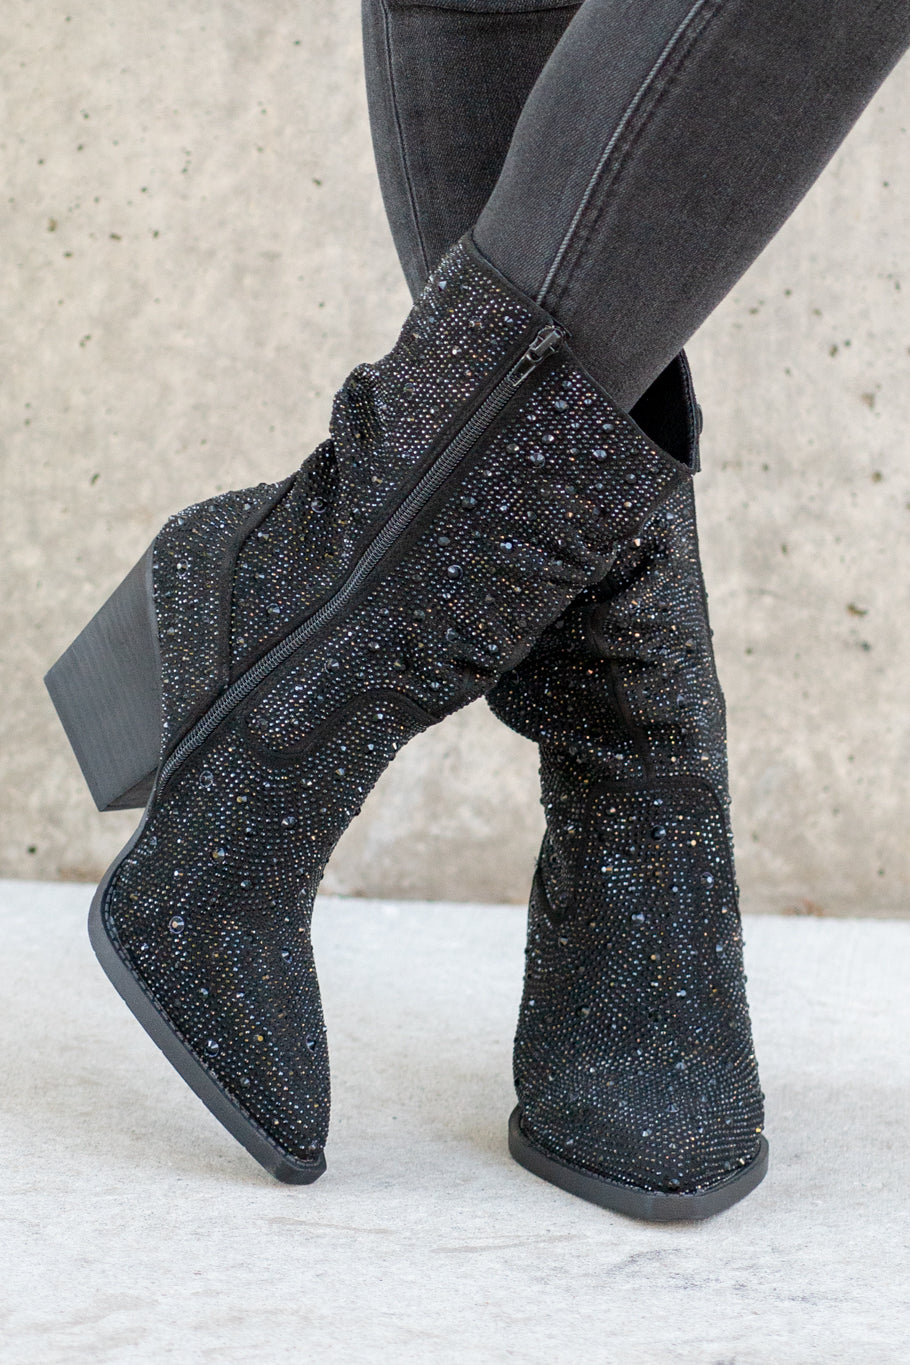 Very G Shoes | Glitterati Kady Slouch Boots - VGLB0377-Black – American ...